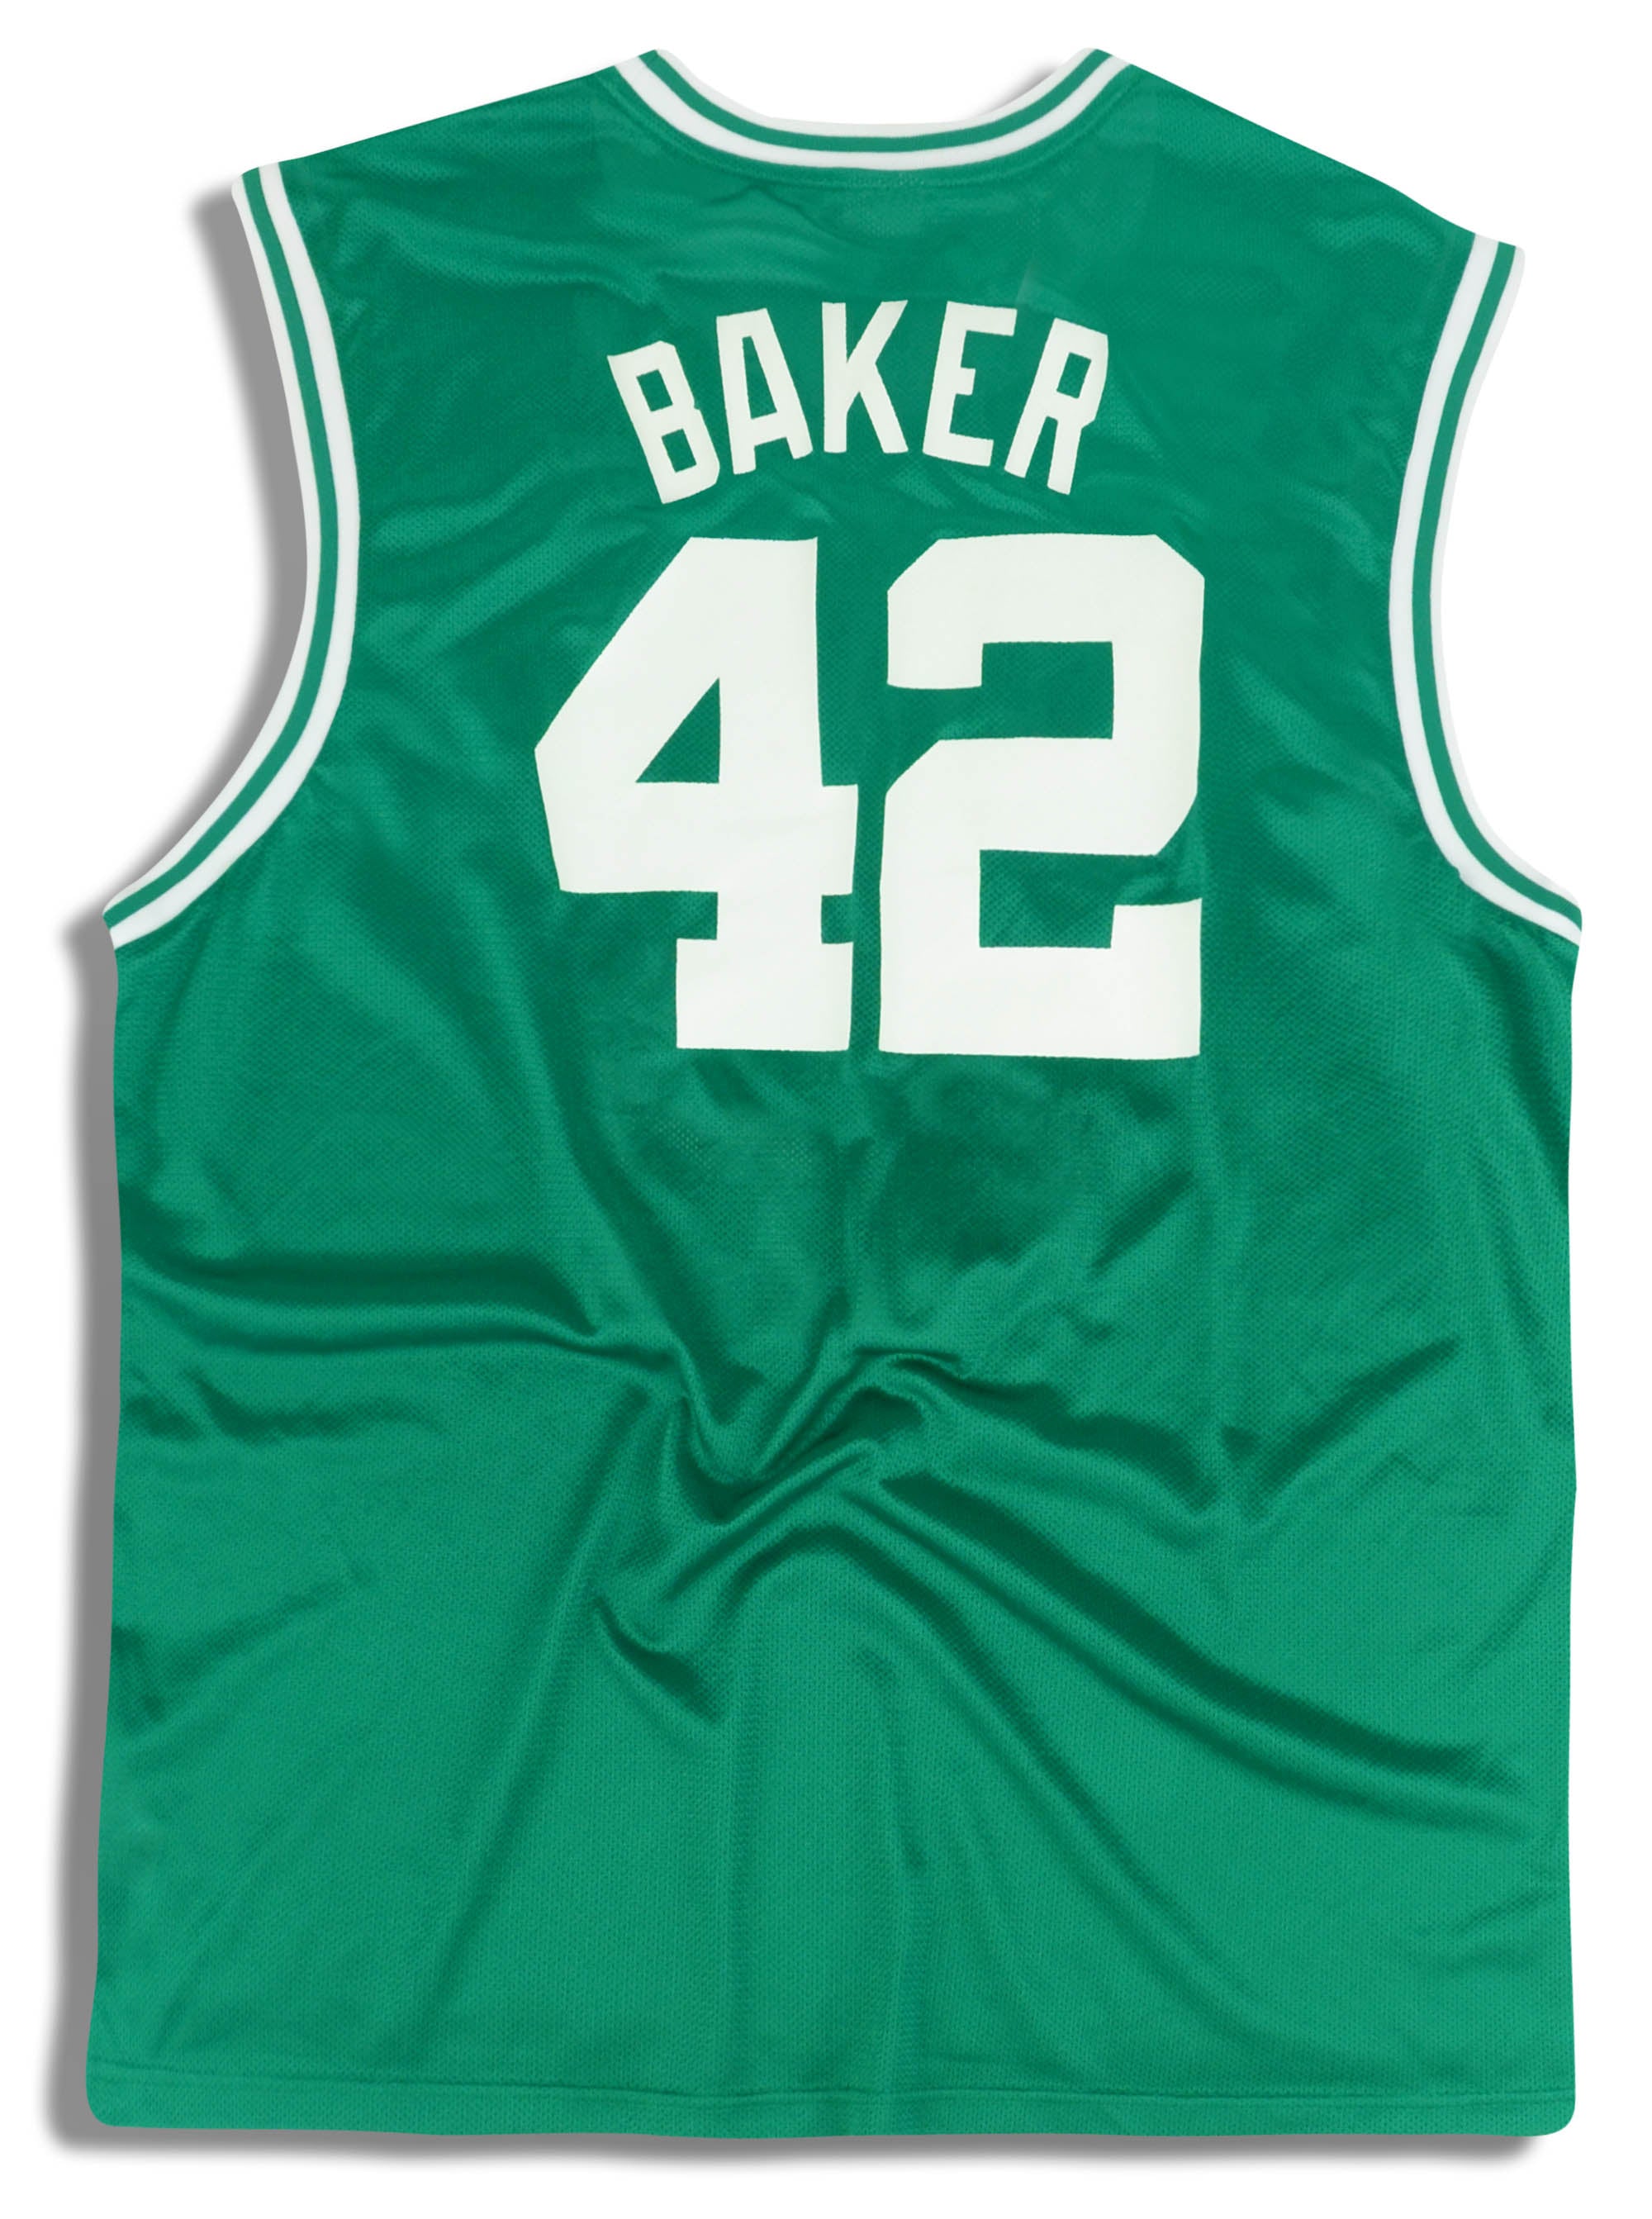 Champion NBA Celtics basket jersey Nr. 34 Pierce size L - Vintage8691